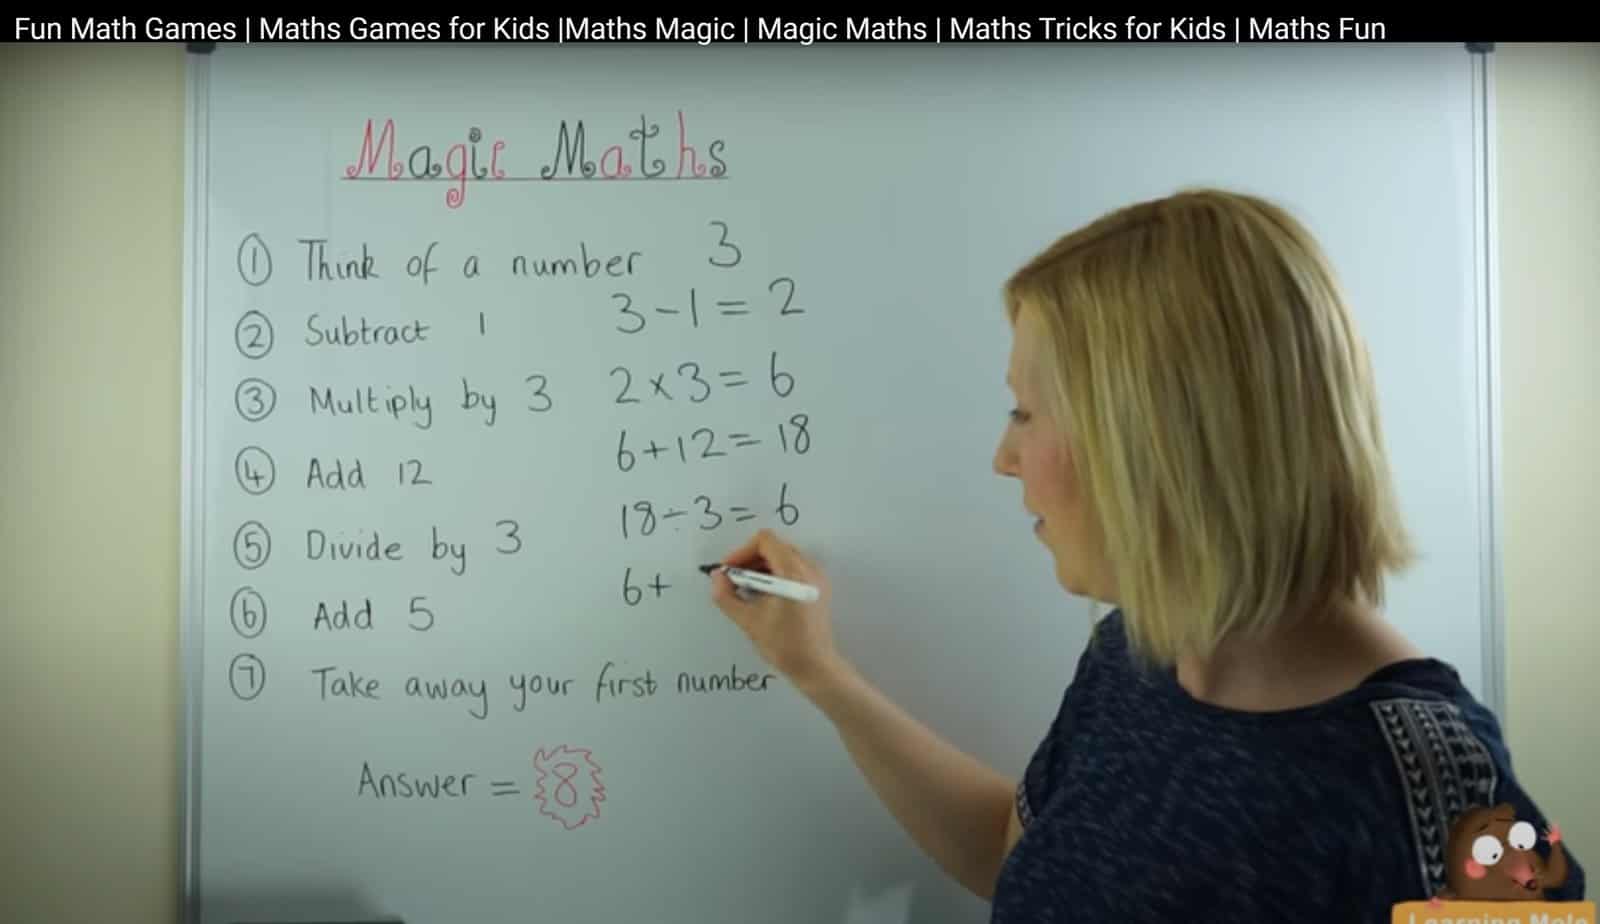 Magic Maths,Magic Maths Tricks,Maths Tricks for Kids,Maths Tricks,Tricks LearningMole